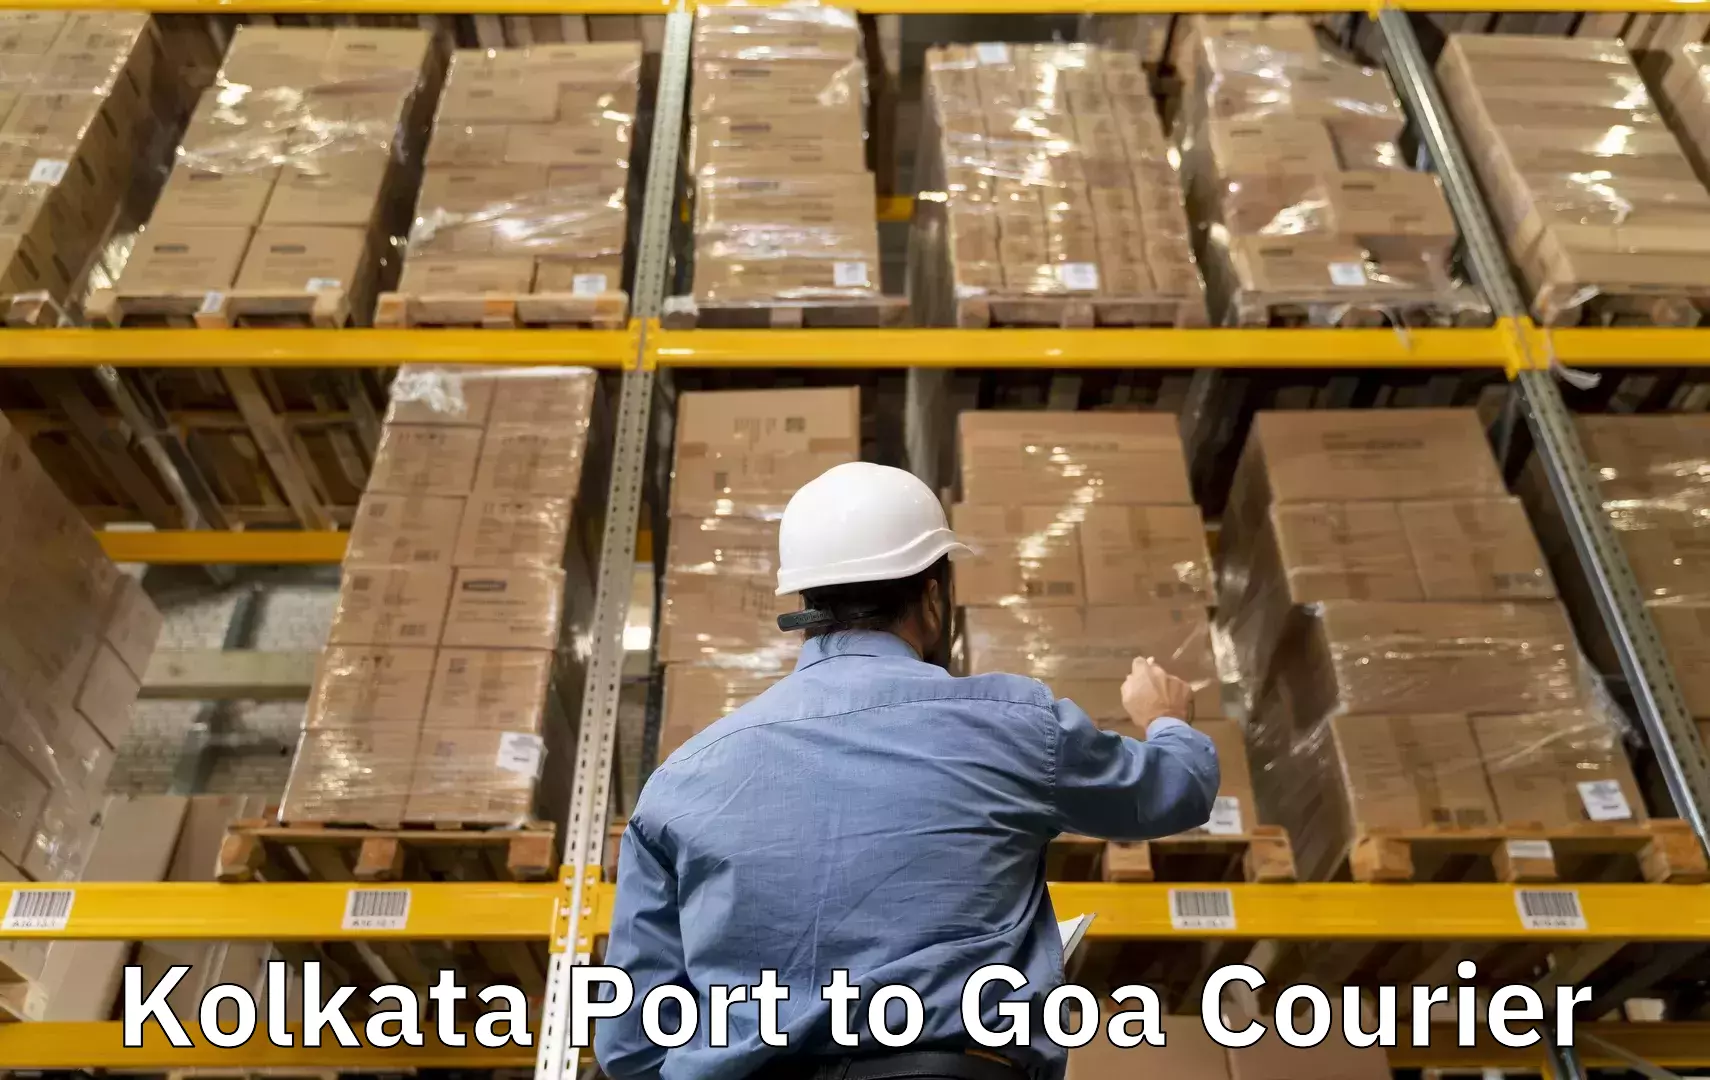 Luggage transfer service Kolkata Port to Margao